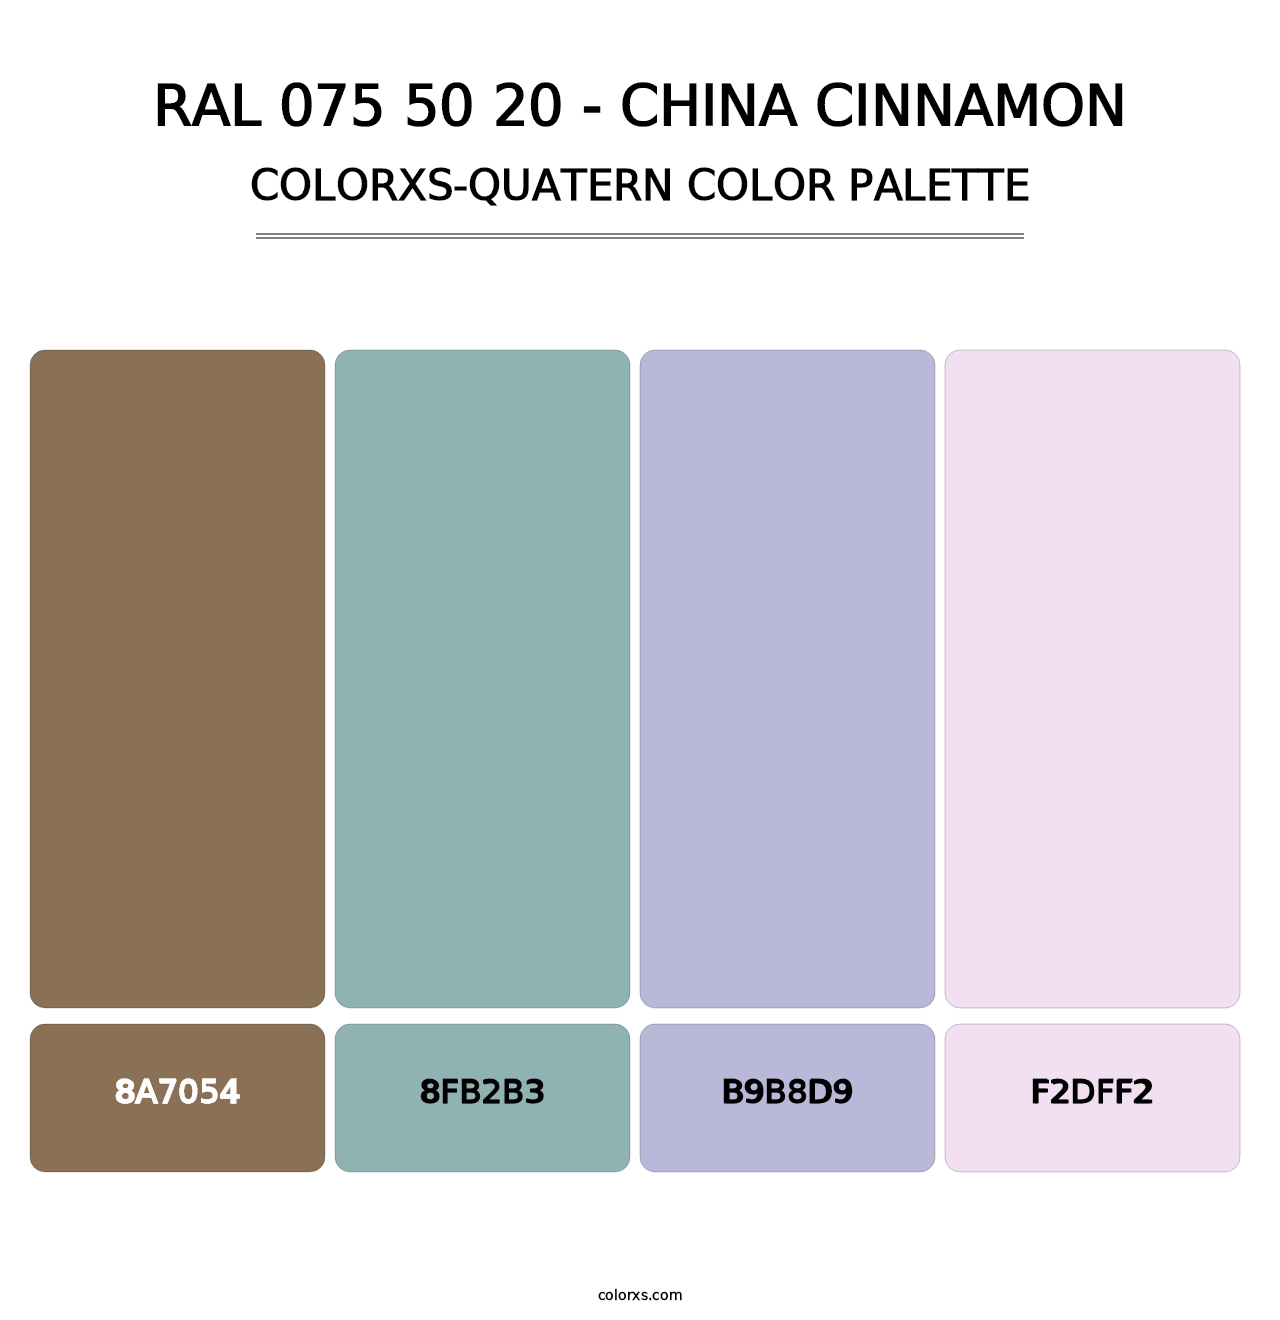 RAL 075 50 20 - China Cinnamon - Colorxs Quatern Palette